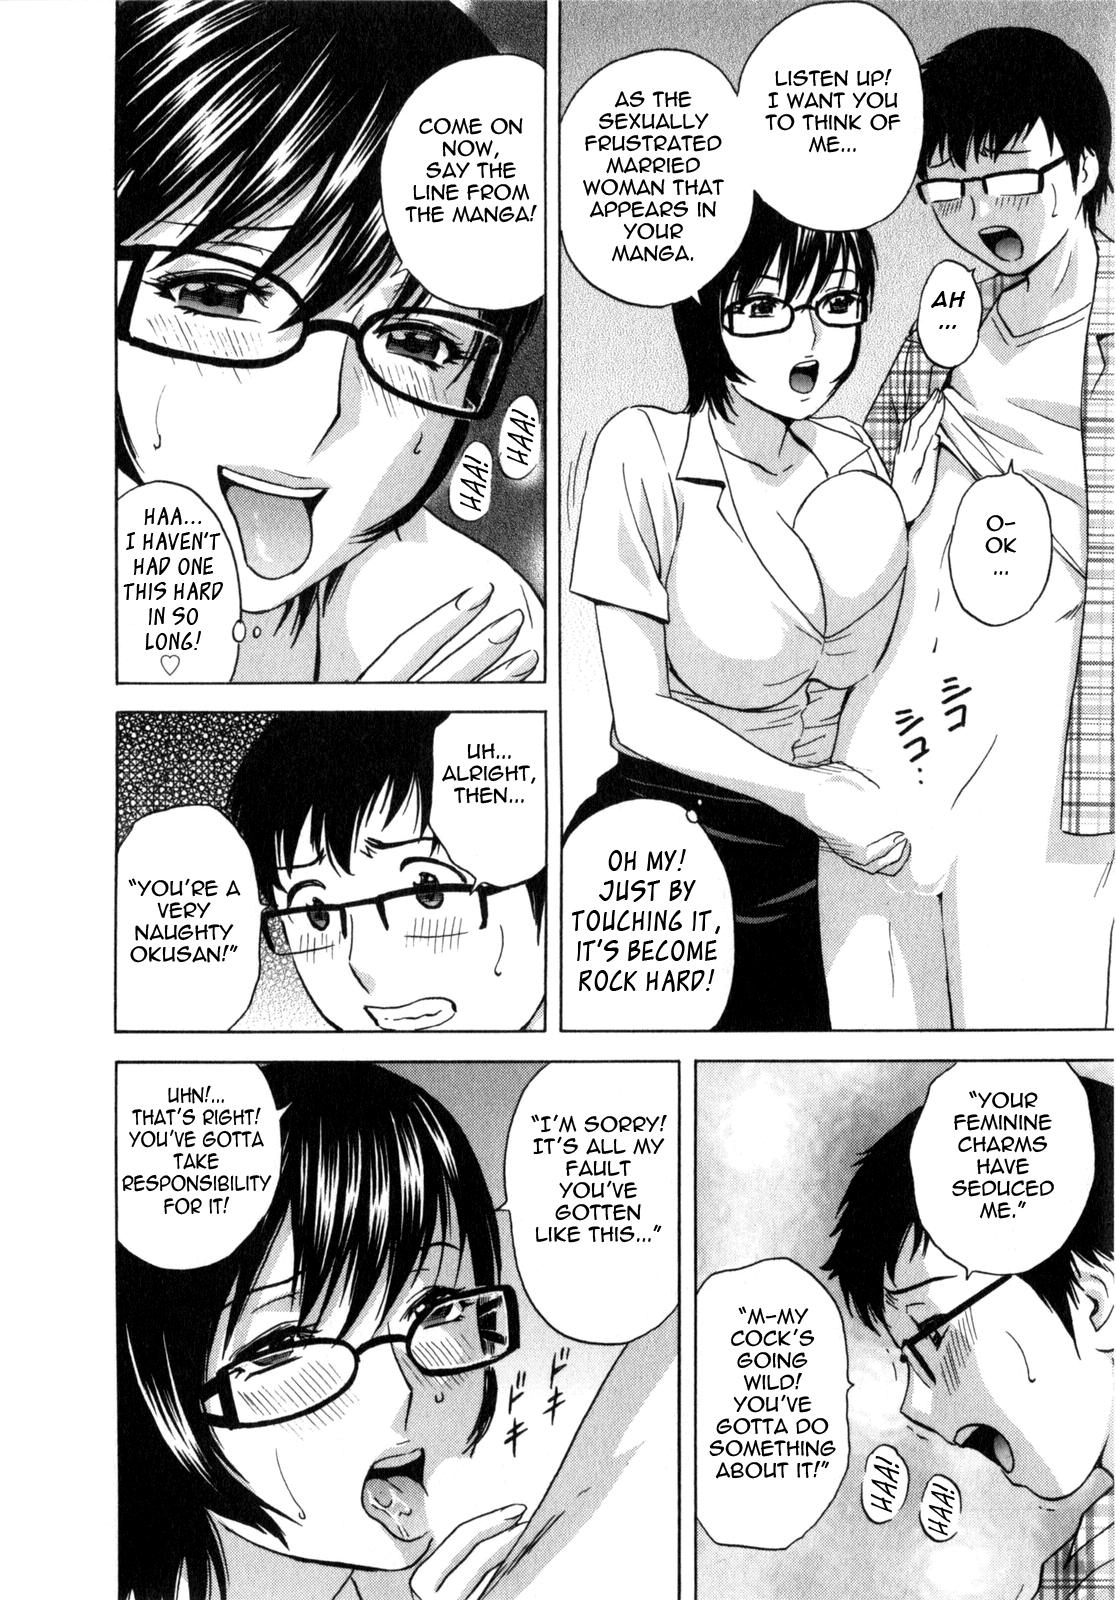 [Hidemaru] Life with Married Women Just Like a Manga 1 - Ch. 1-9 [English] {Tadanohito} 111